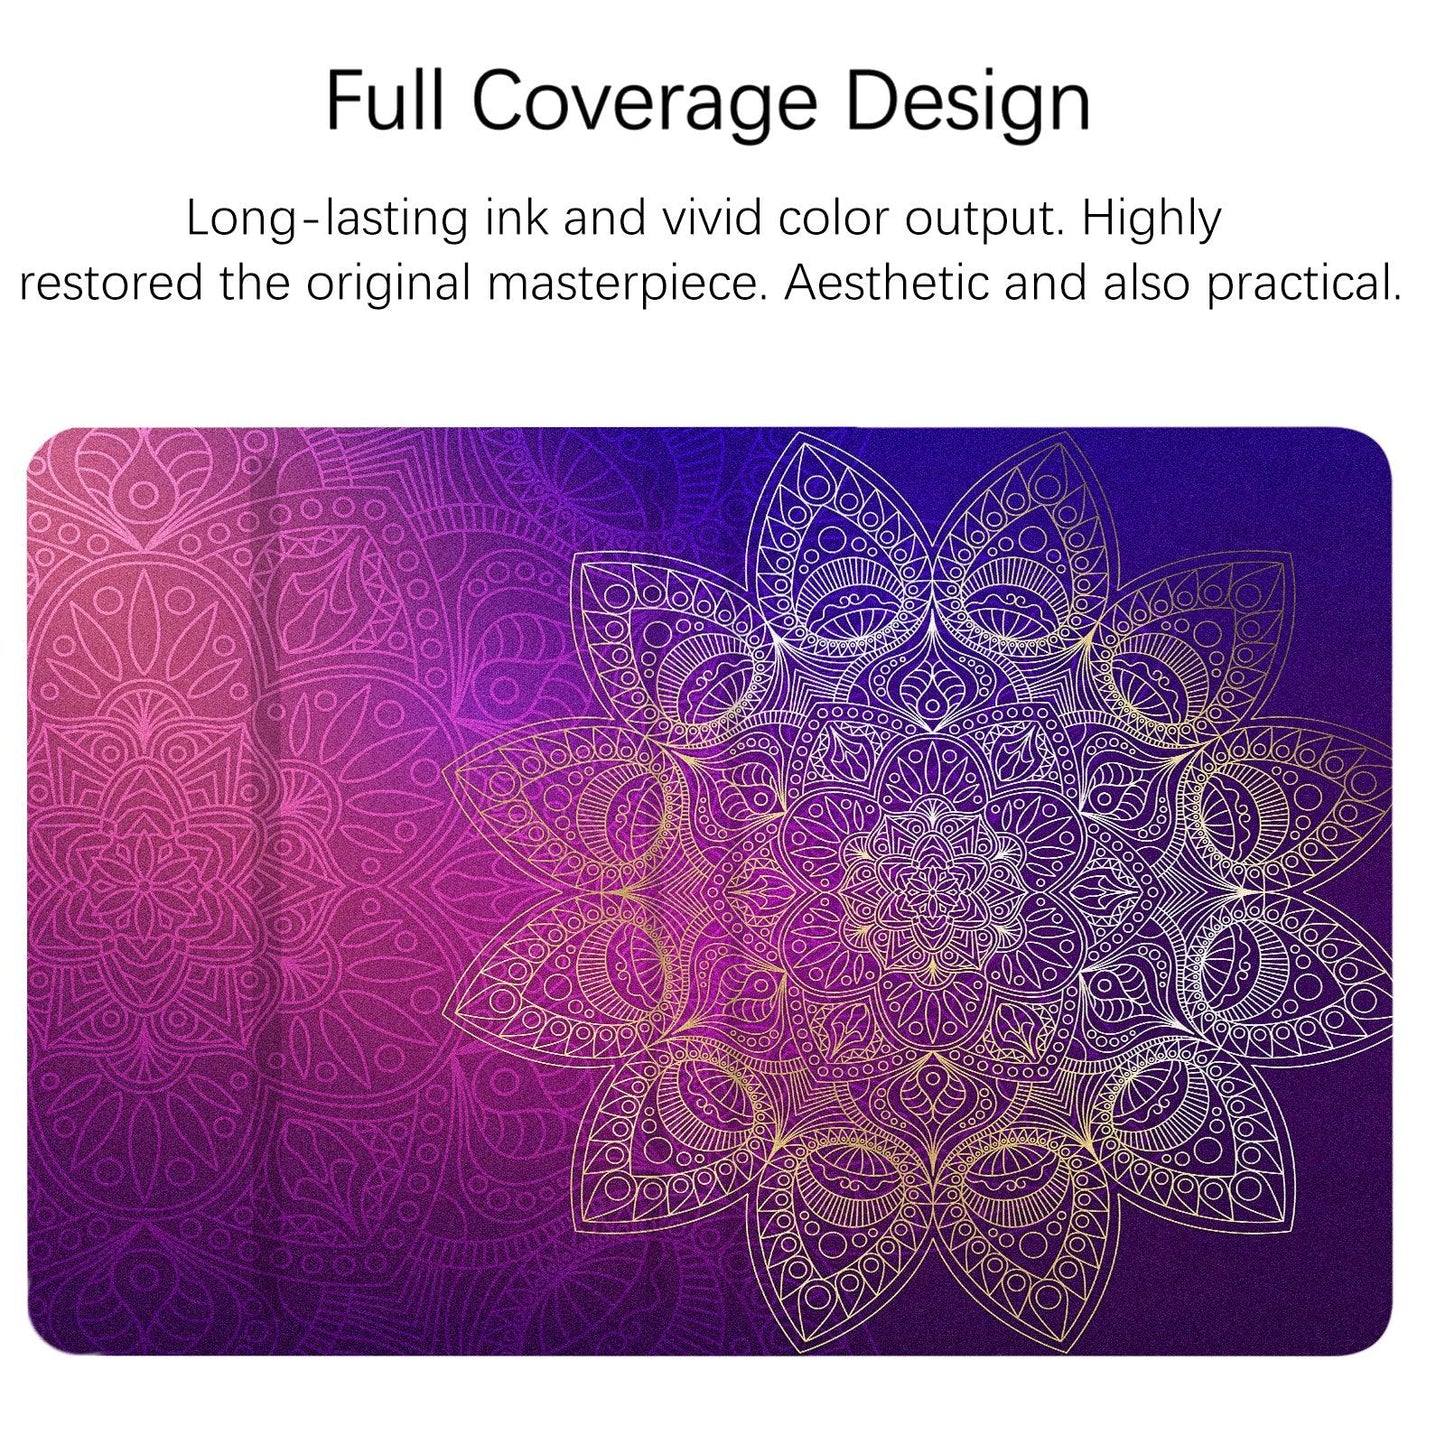 iPad Mini 6th Generation Contemporary Flower Case (8.3 Inch) (Golden Mandalas) - Berkin Arts